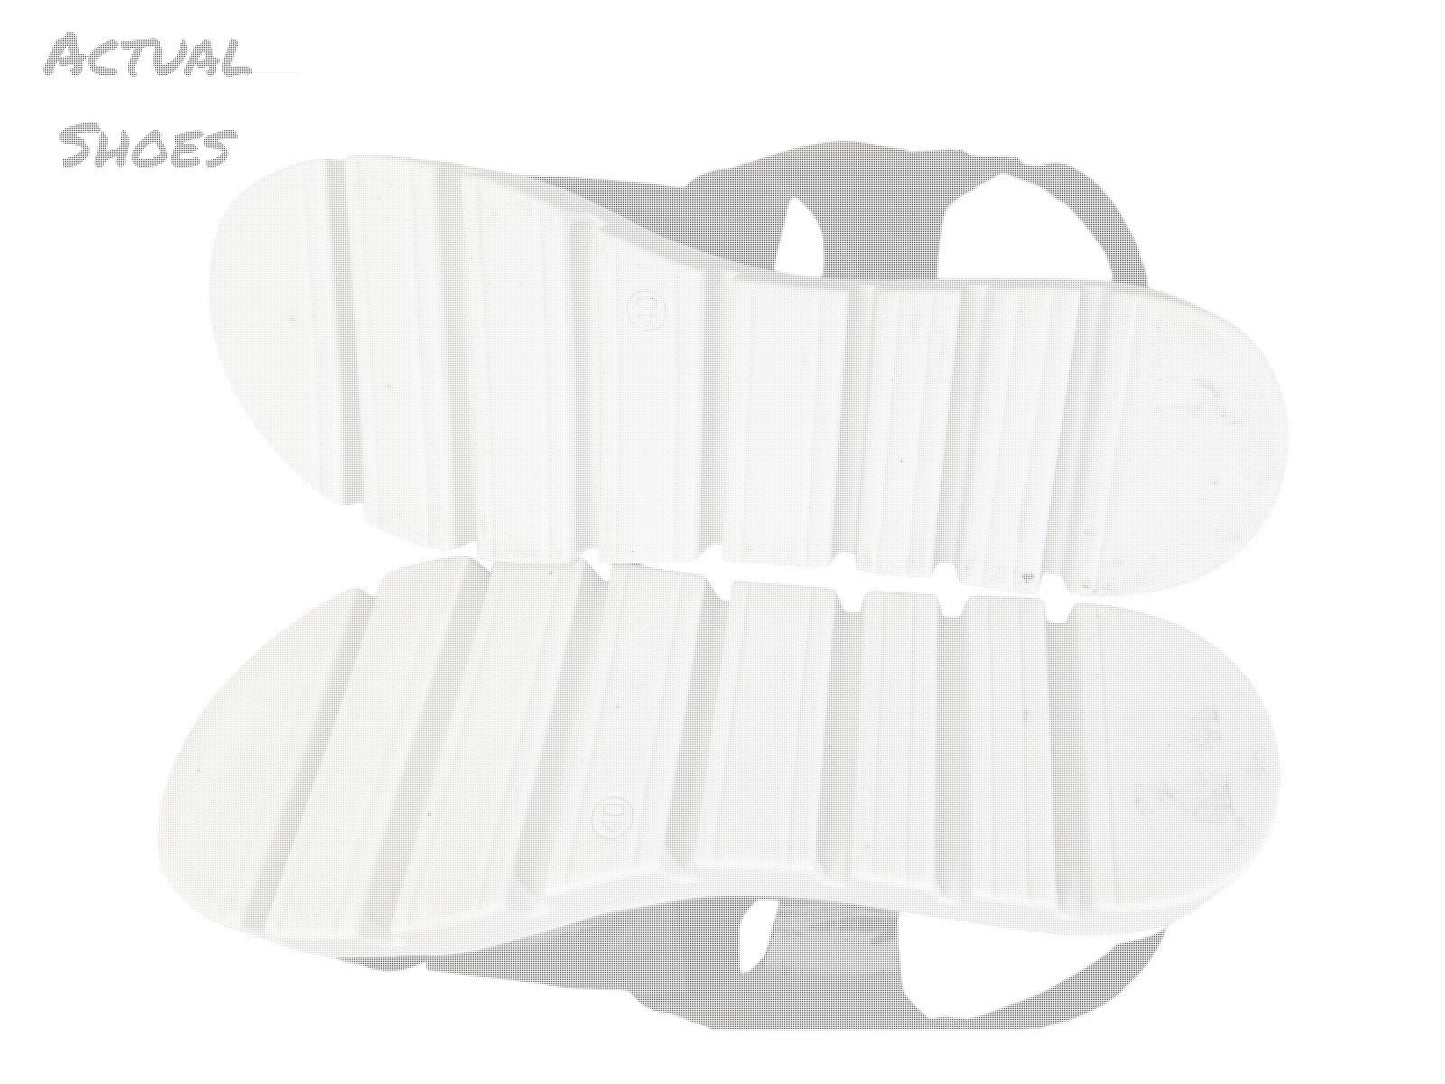 DJANGO & JULIETTE 40 Riku Patent Leather Black/White Platform Sandals AS NEW!